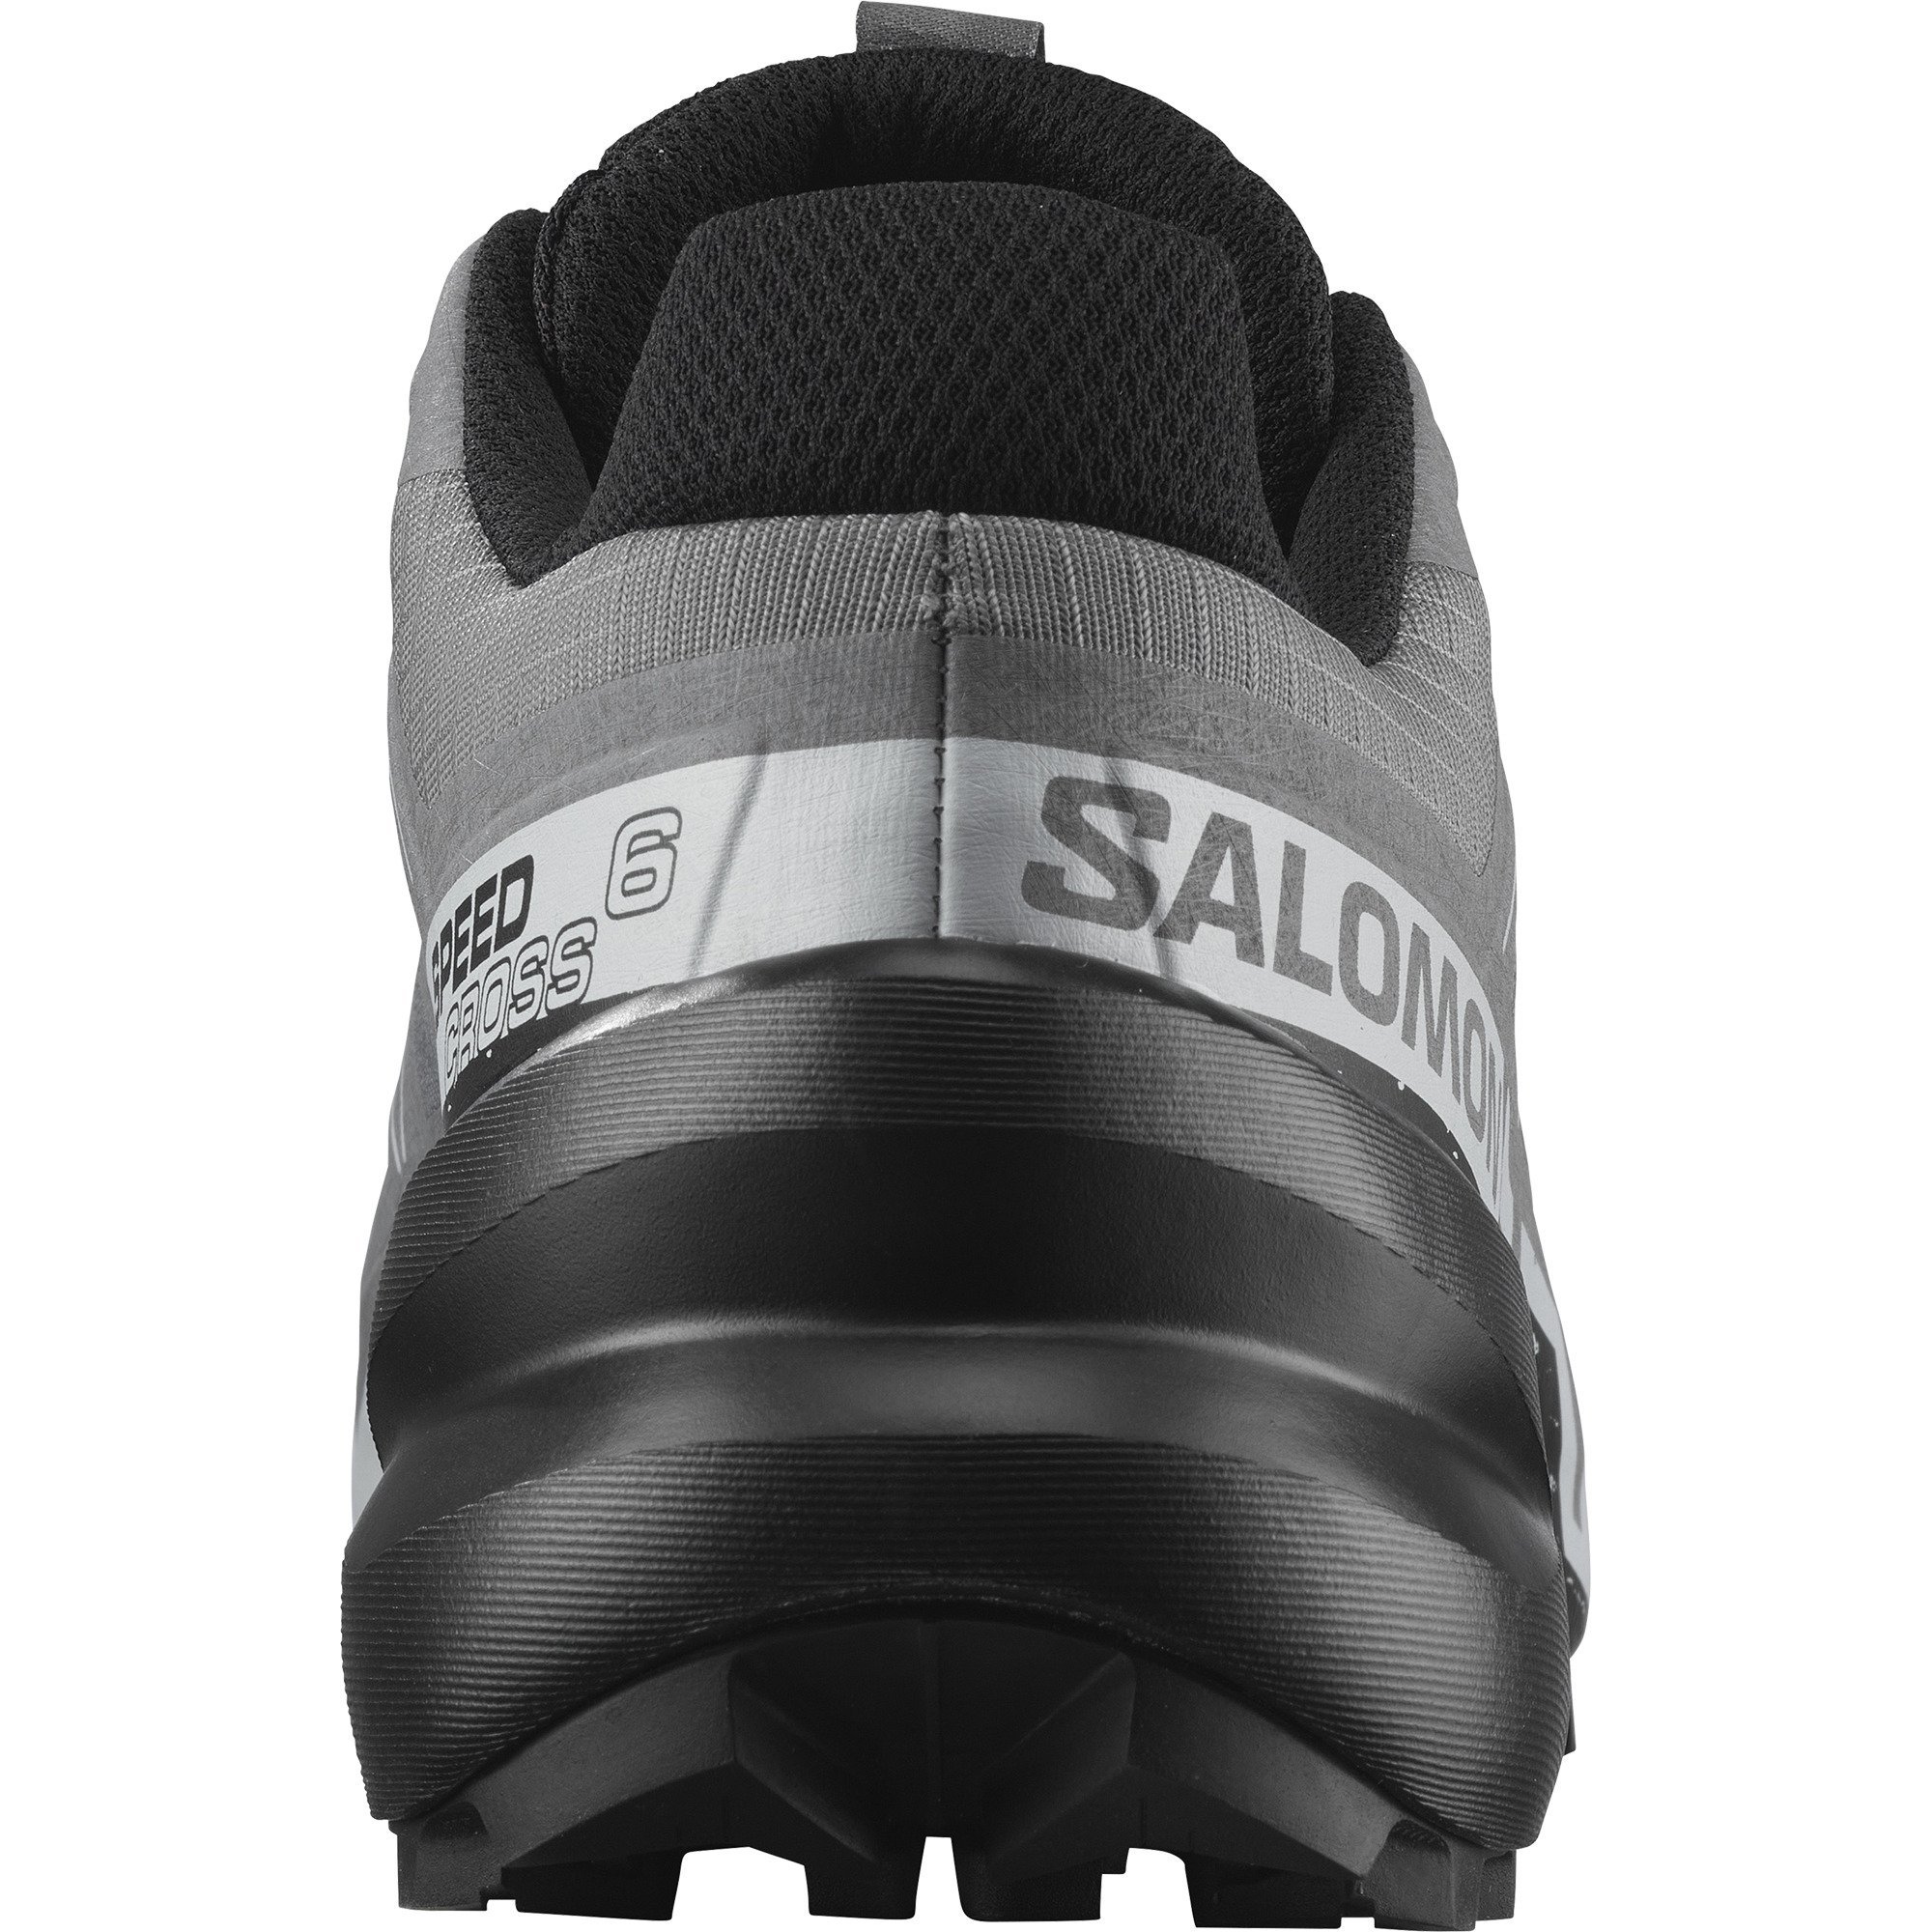 Obuv Salomon Speedcross 6 M - sivá/čierna